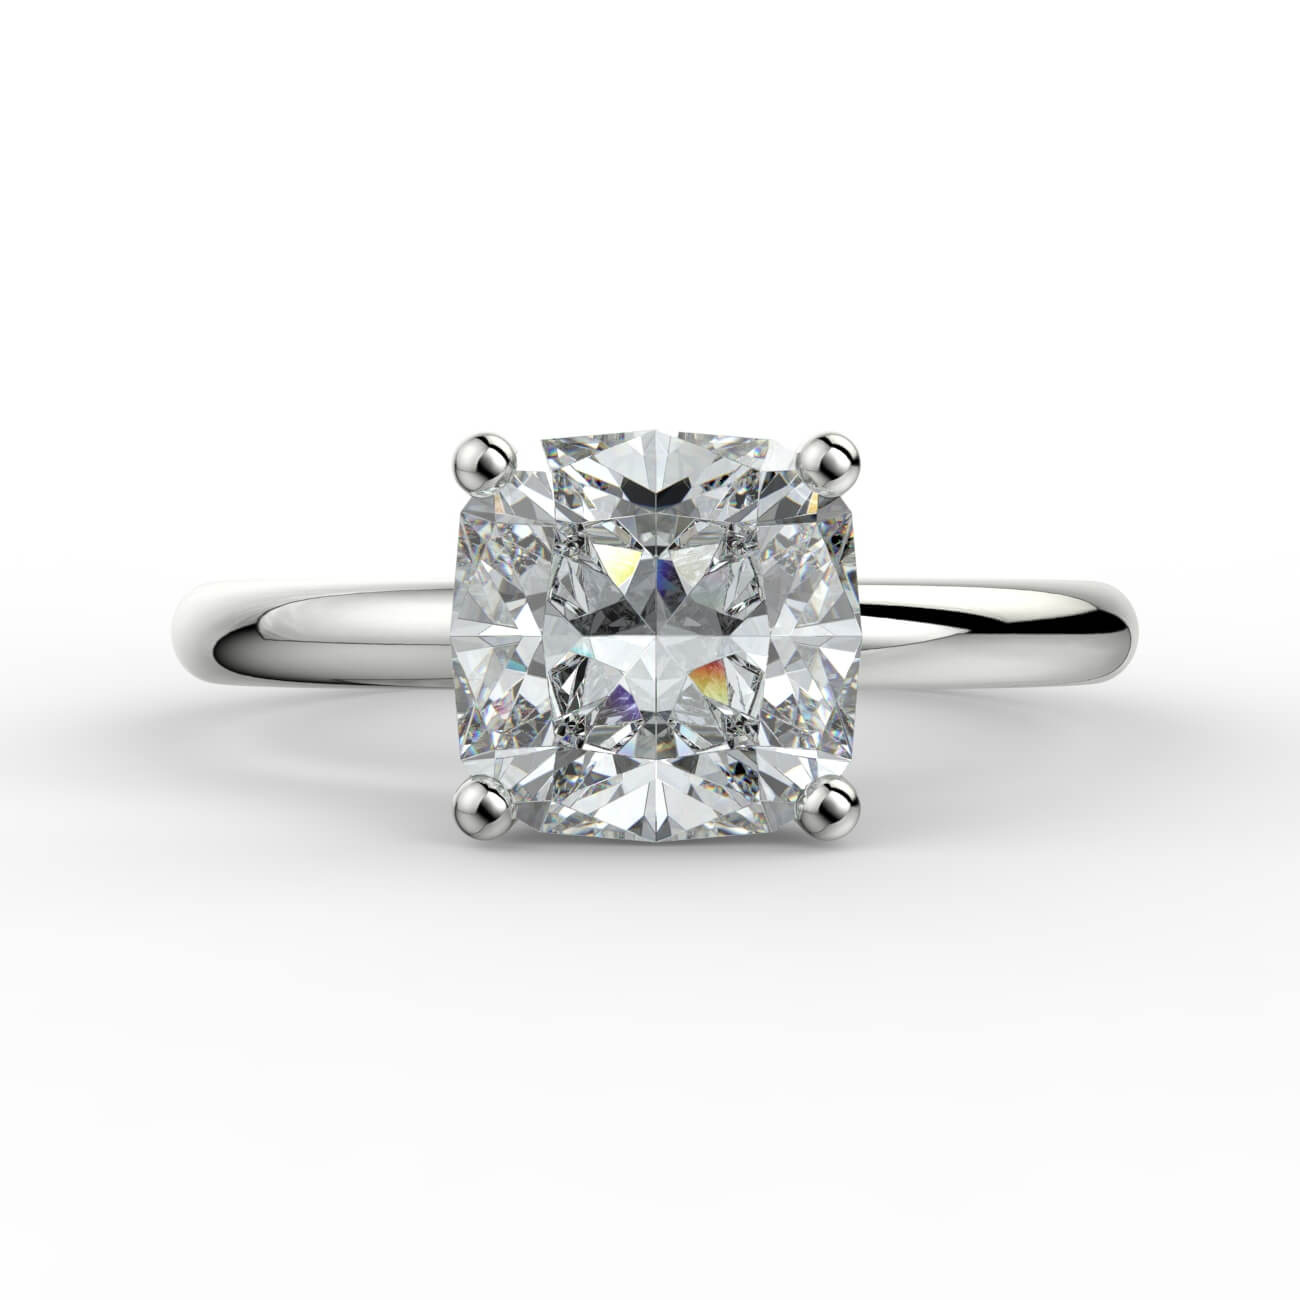 Solitaire cushion cut diamond engagement ring in platinum – Australian Diamond Network